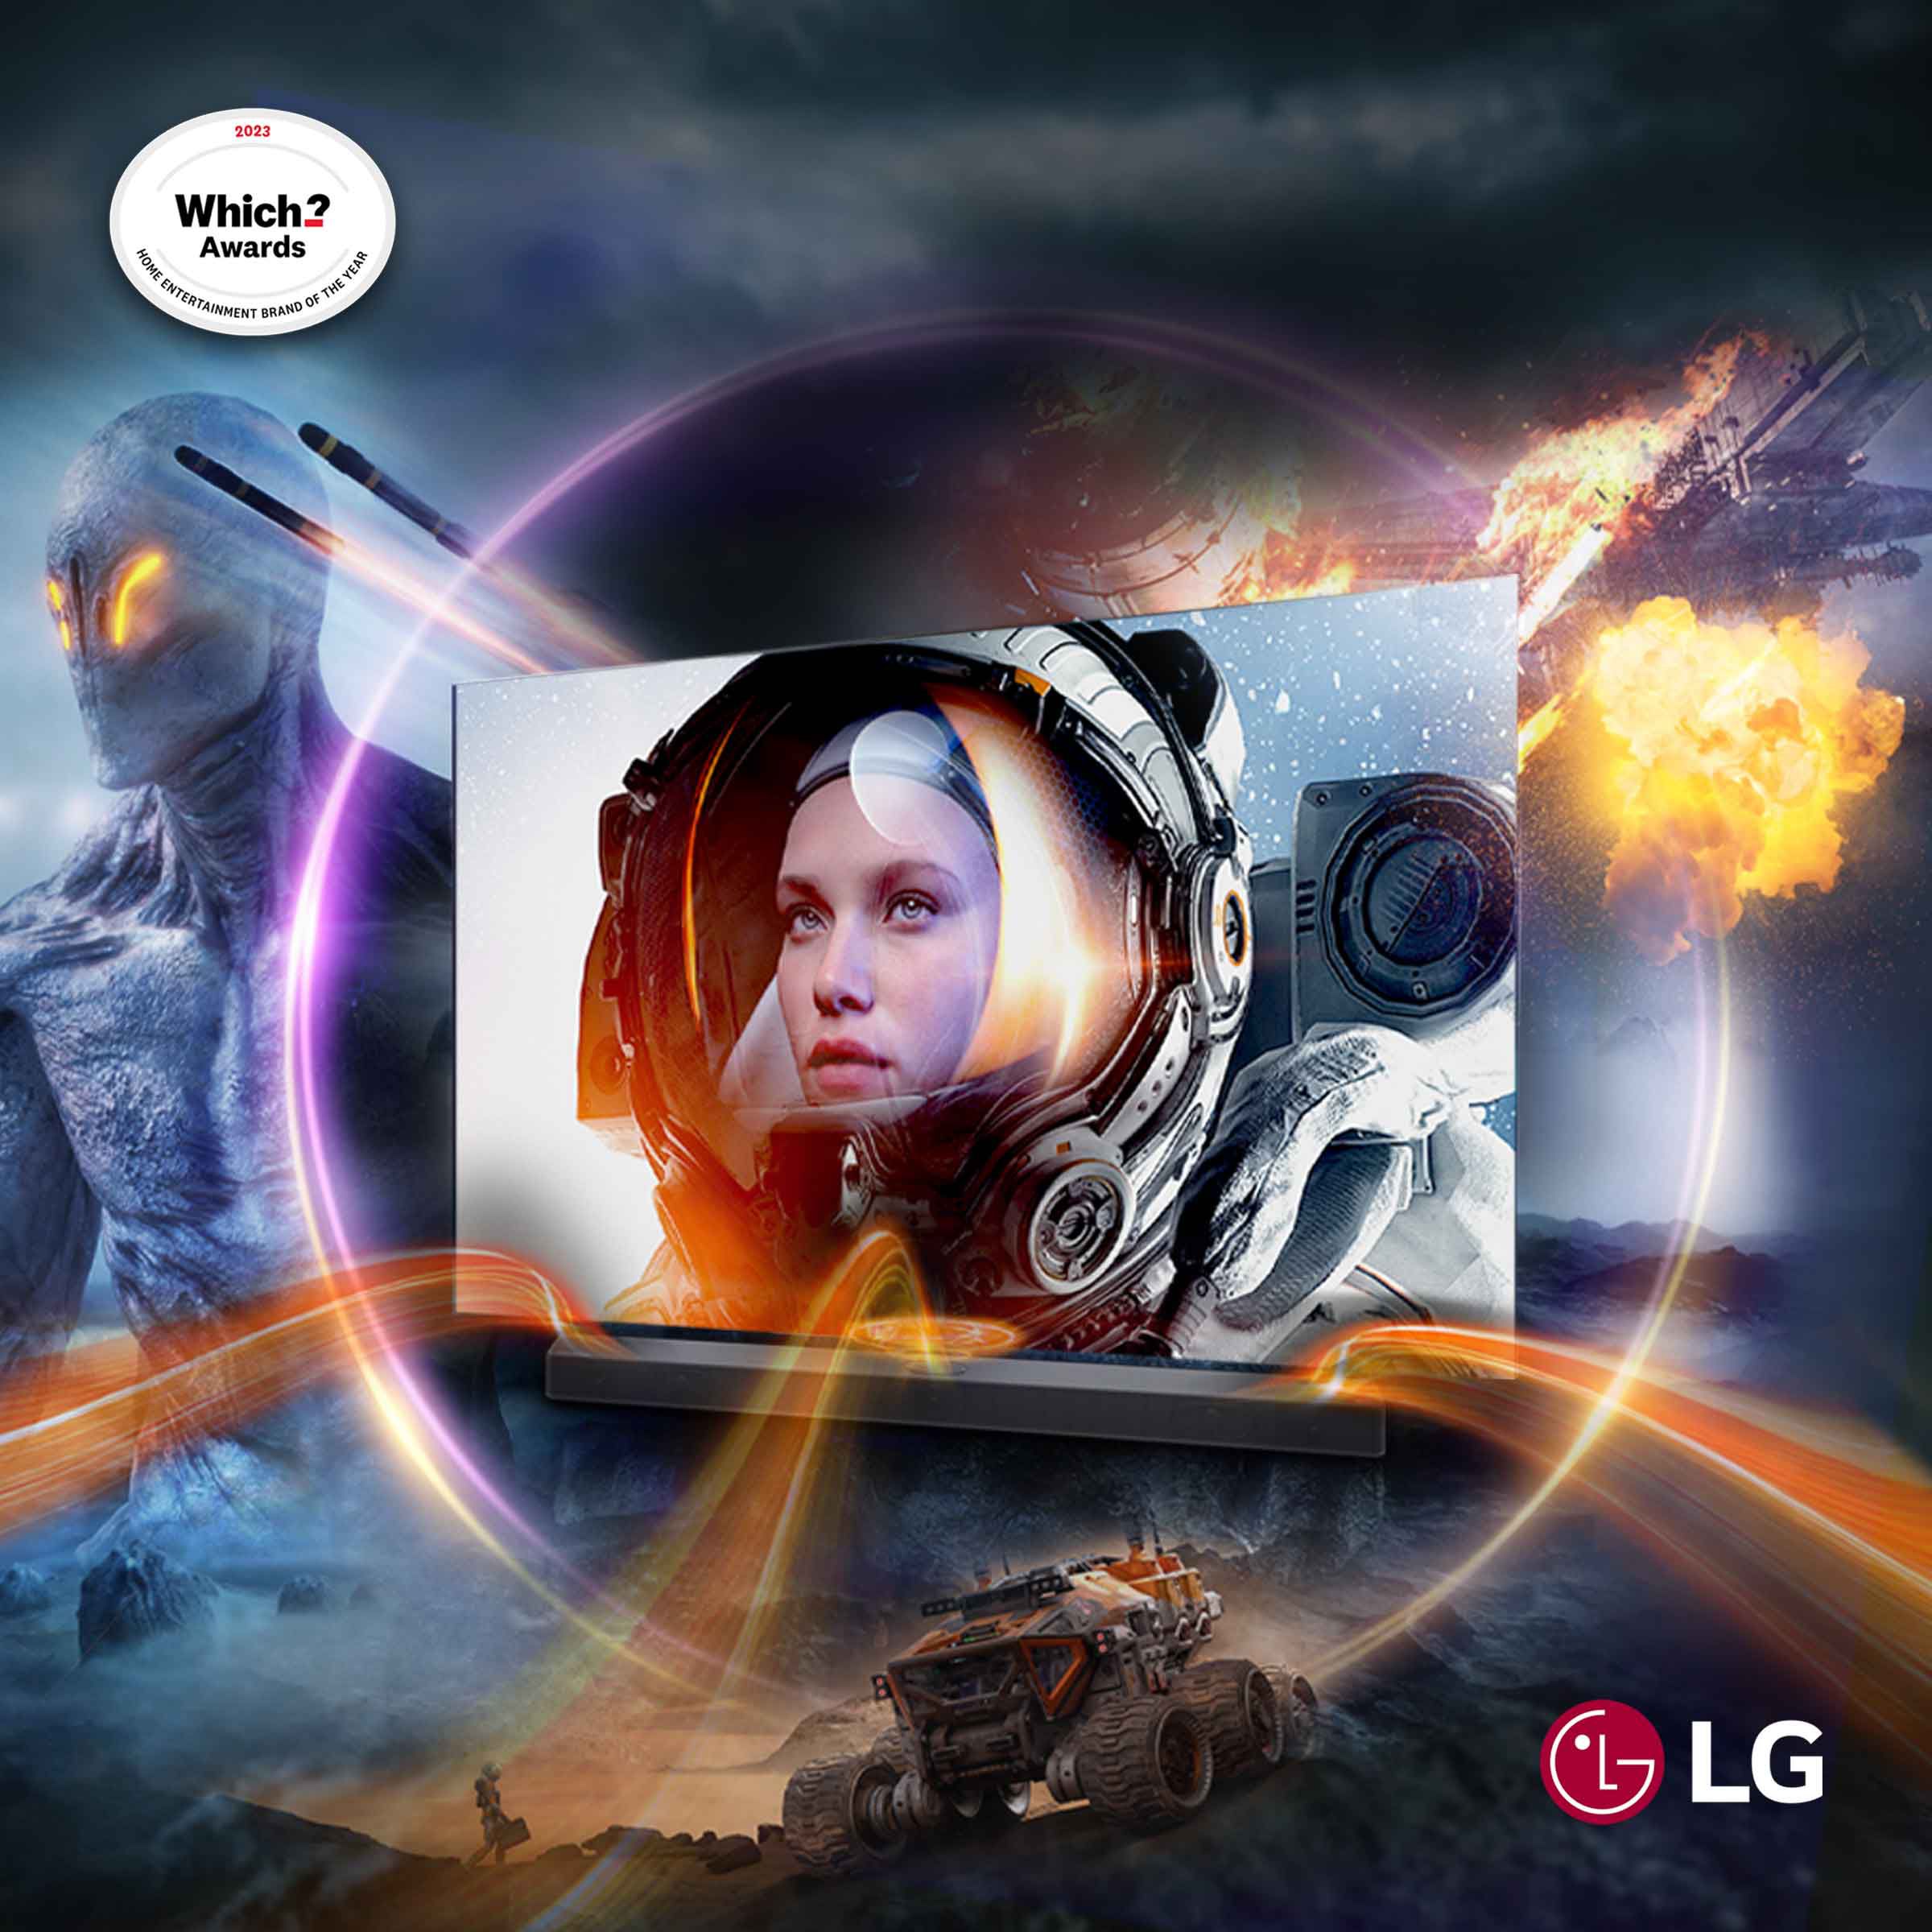 LG TV Screen displayimg female aastronaut amongst backdrop of Sci-Fi scene